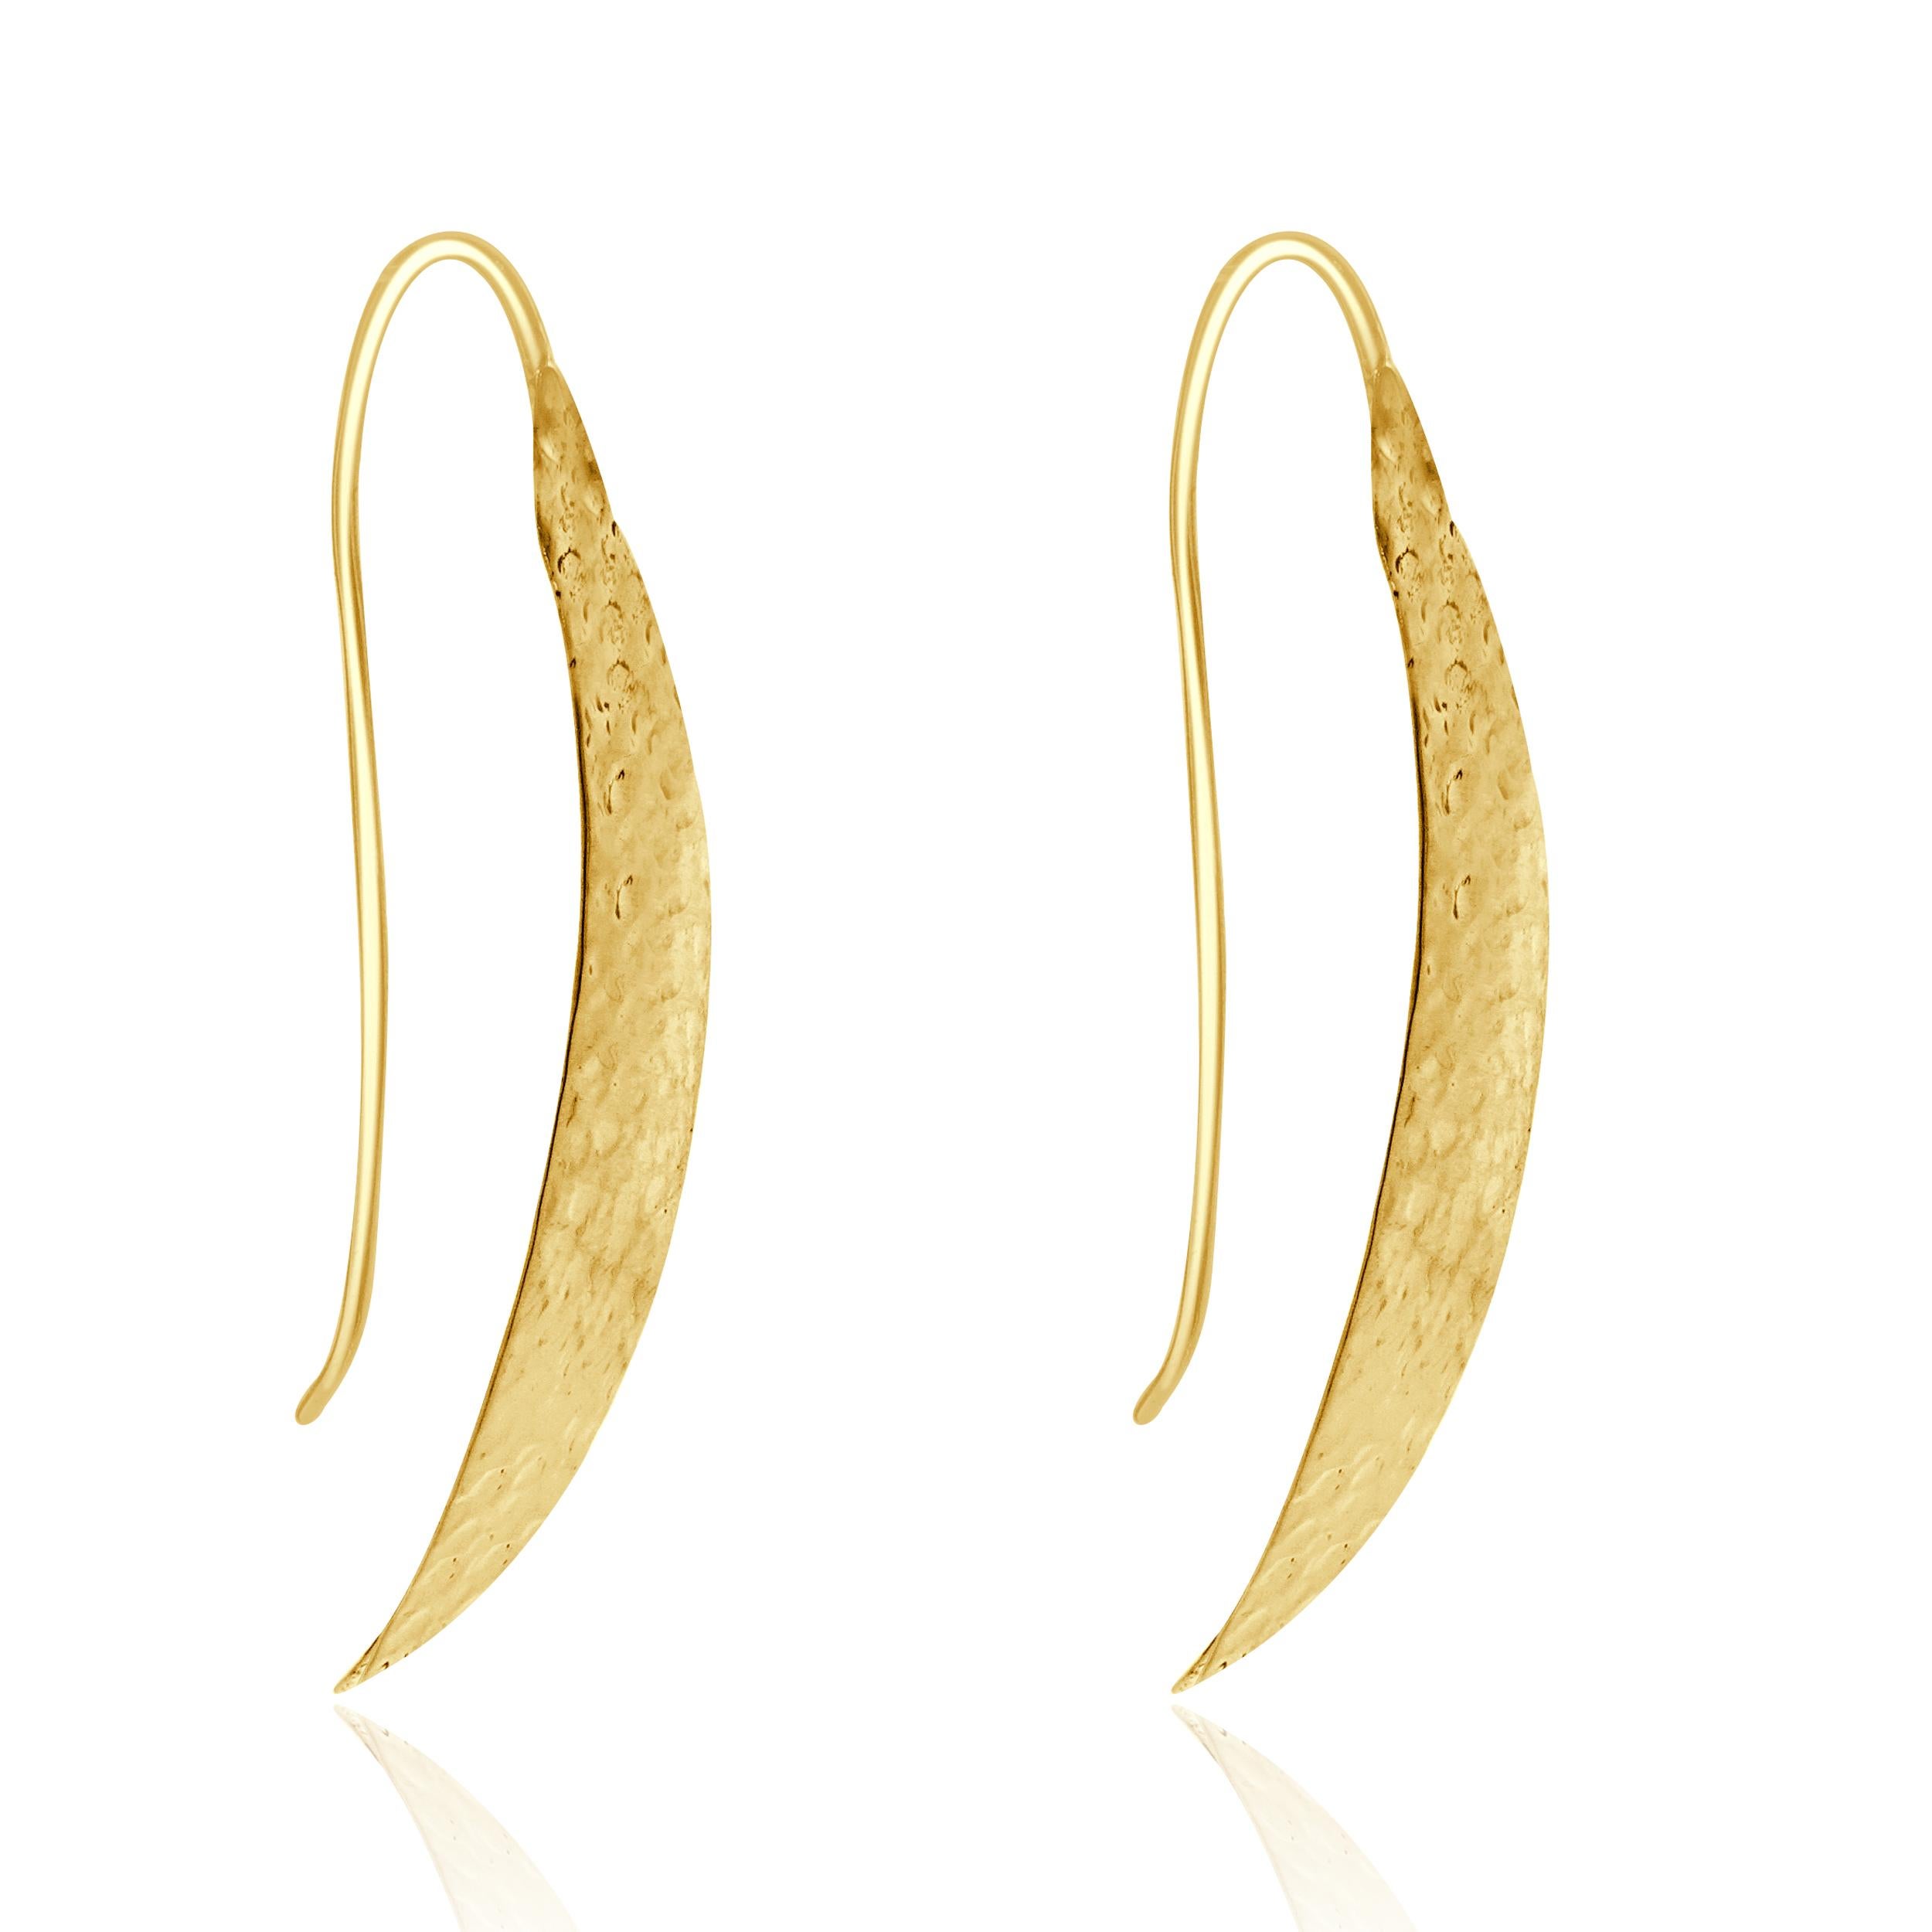 Material: 14K yellow gold
Dimensions: earrings measure 30mm
Weight:  0.74 grams